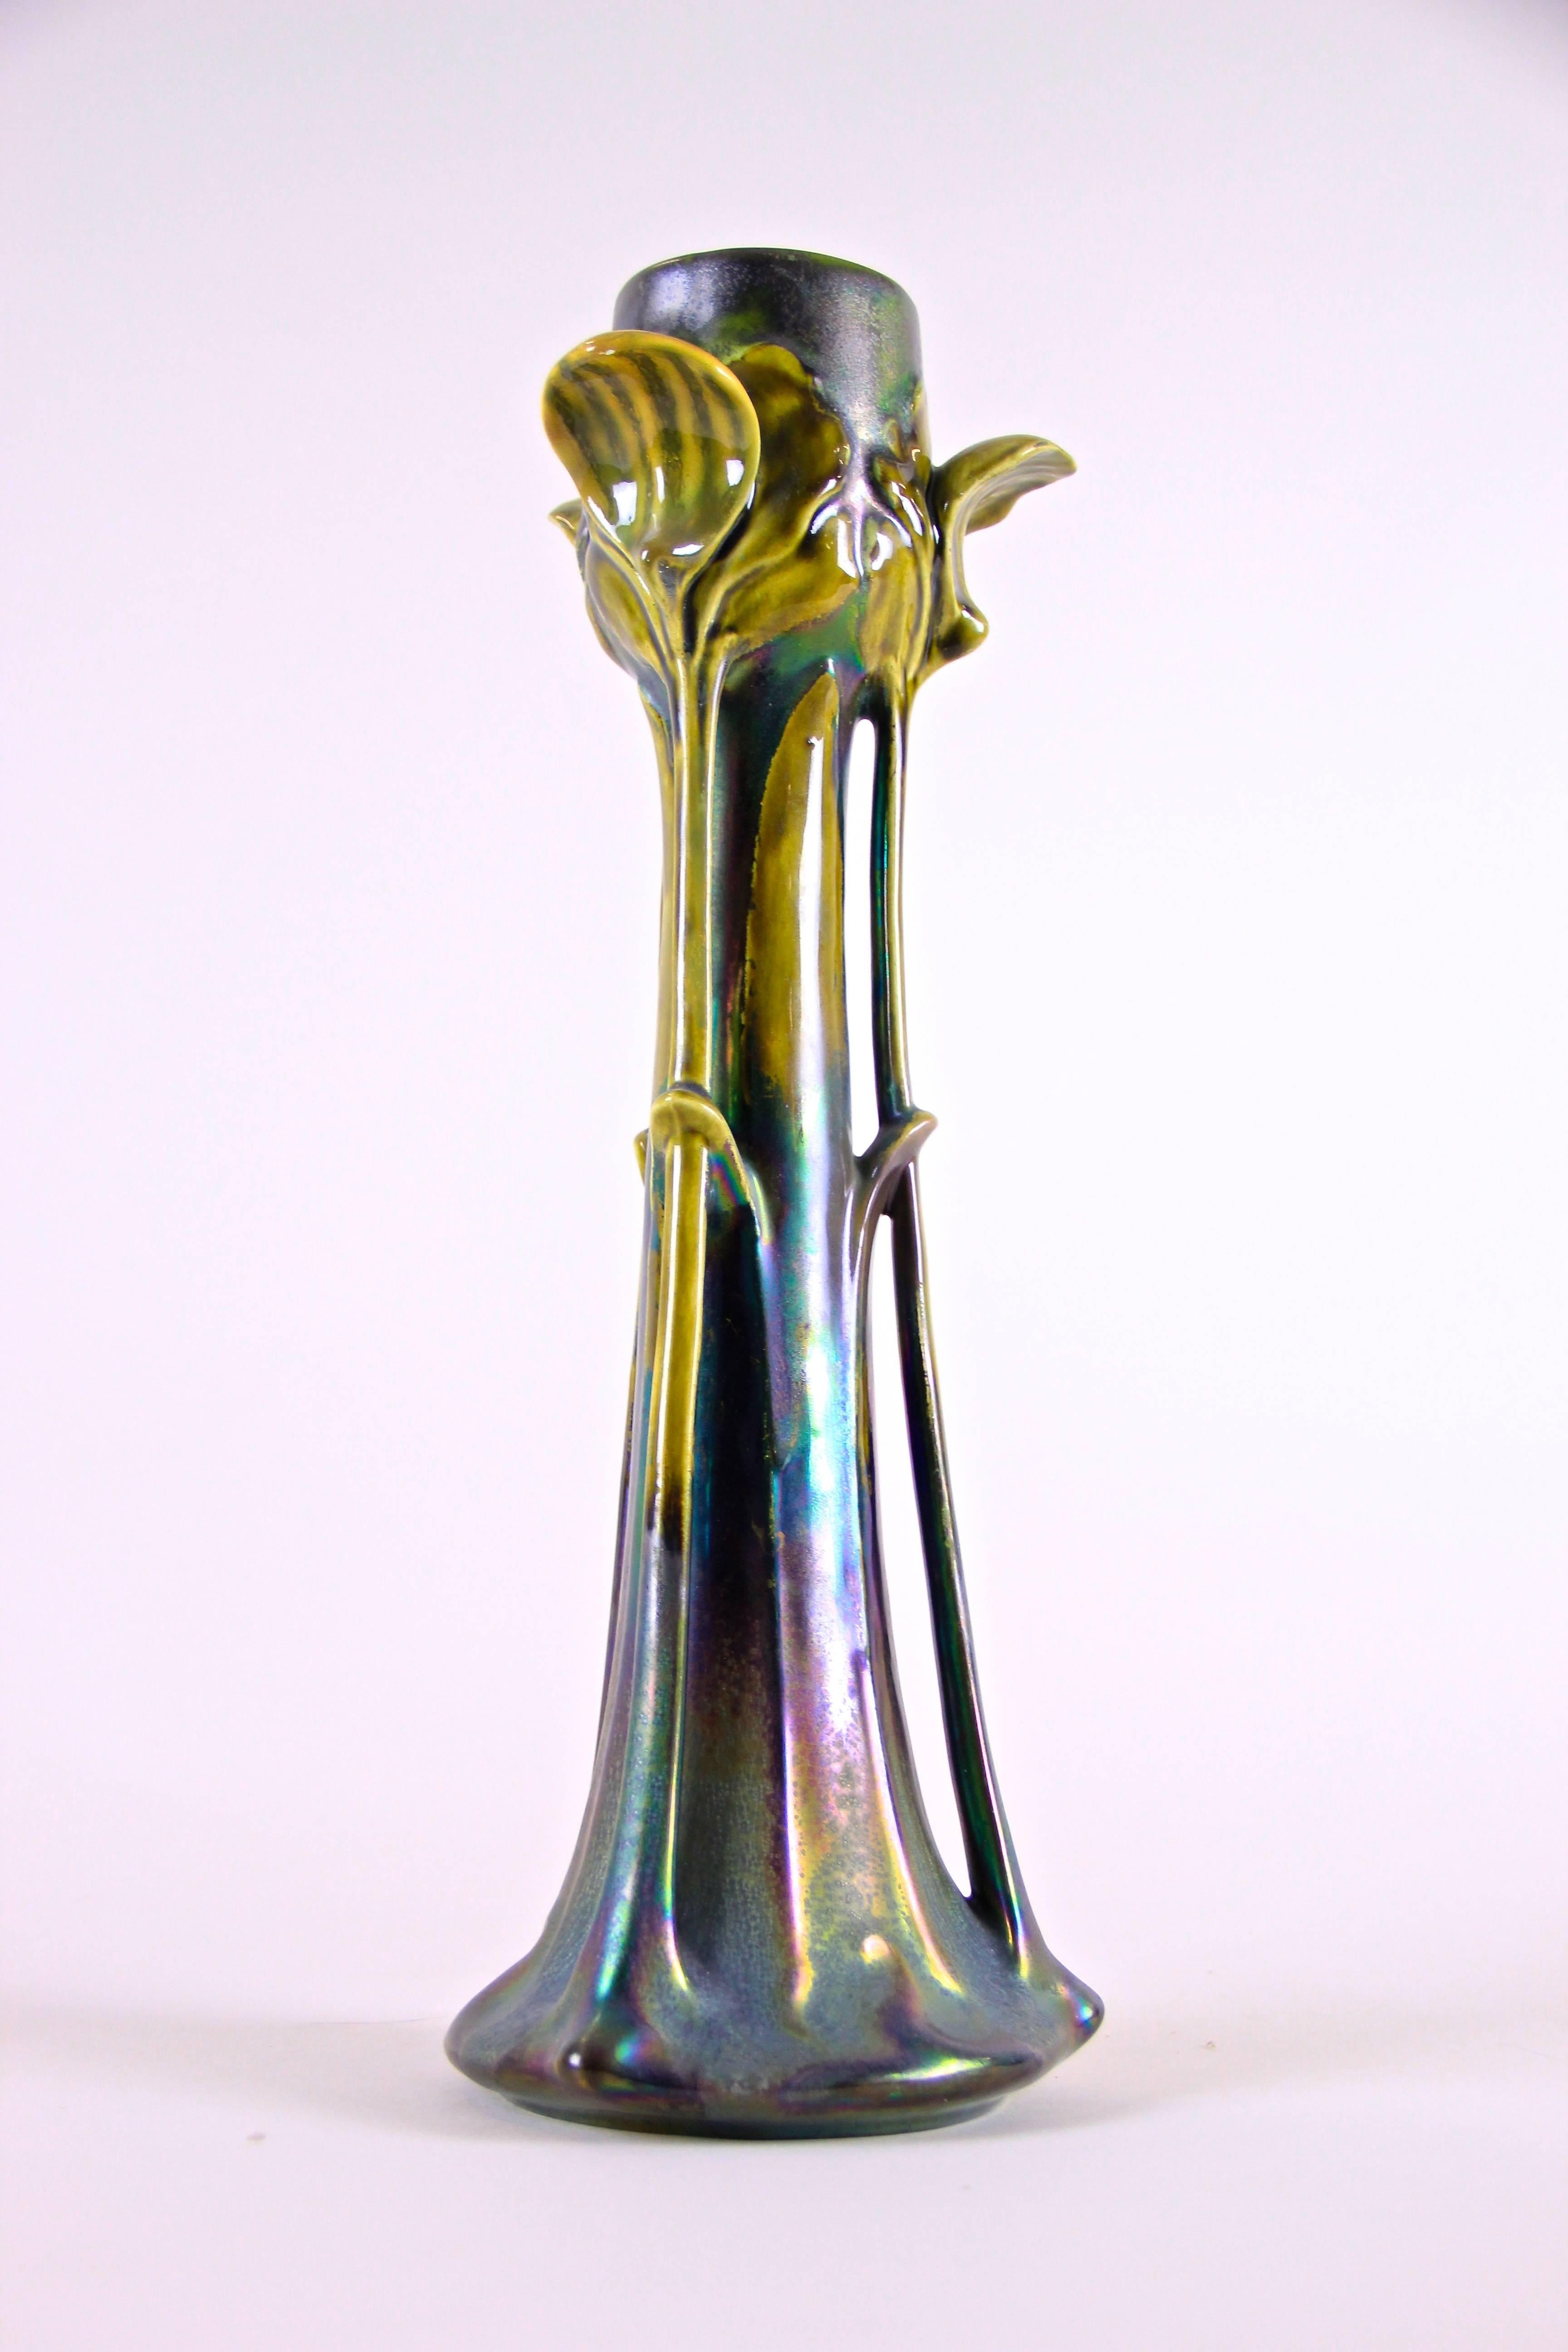 20th Century Art Nouveau Vase by Workshops of Znaim, CZ, circa 1905